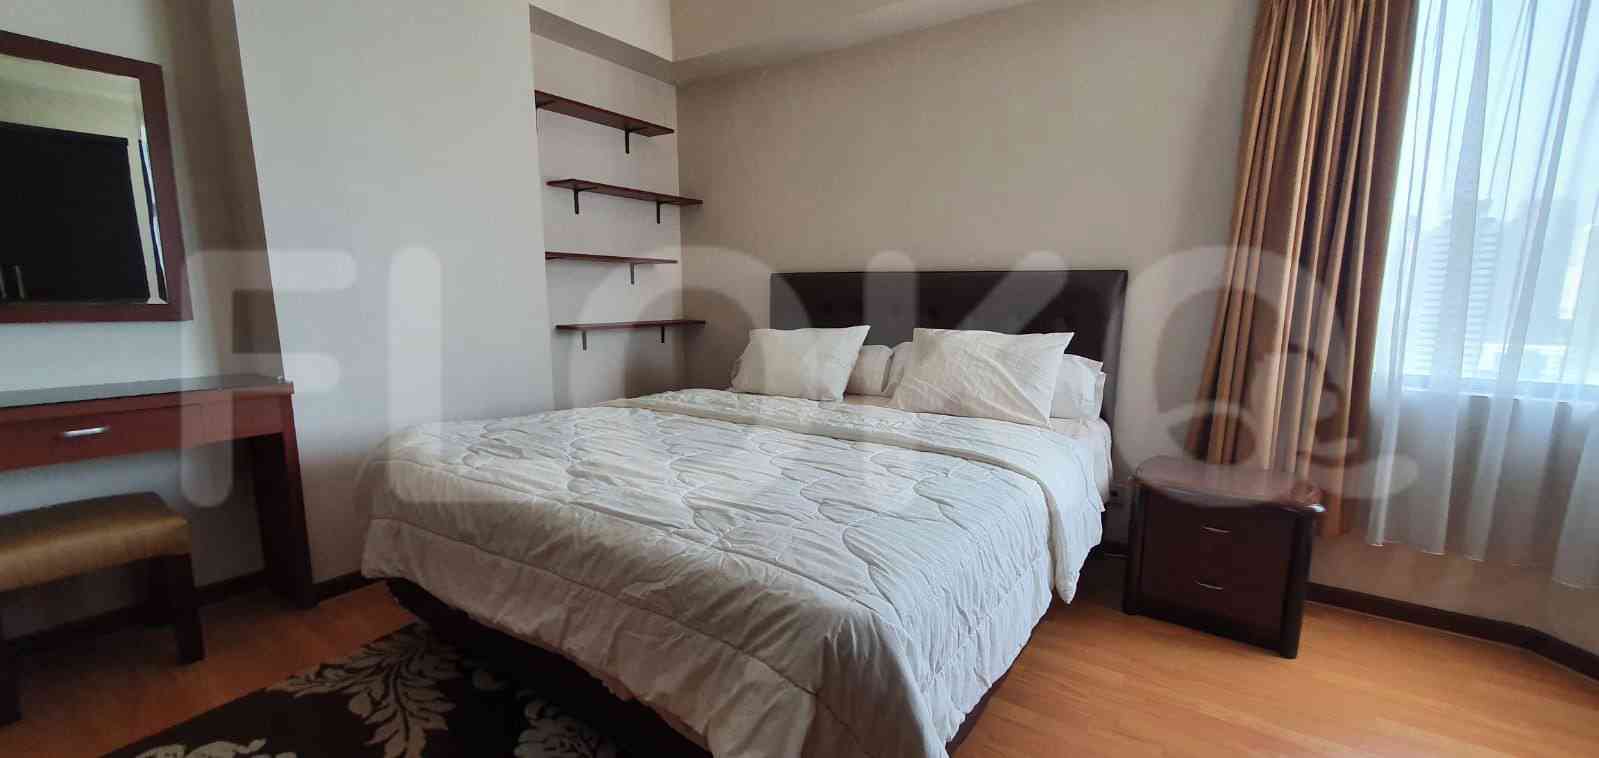 3 Bedroom on 27th Floor for Rent in Aryaduta Suites Semanggi - fsu7eb 6